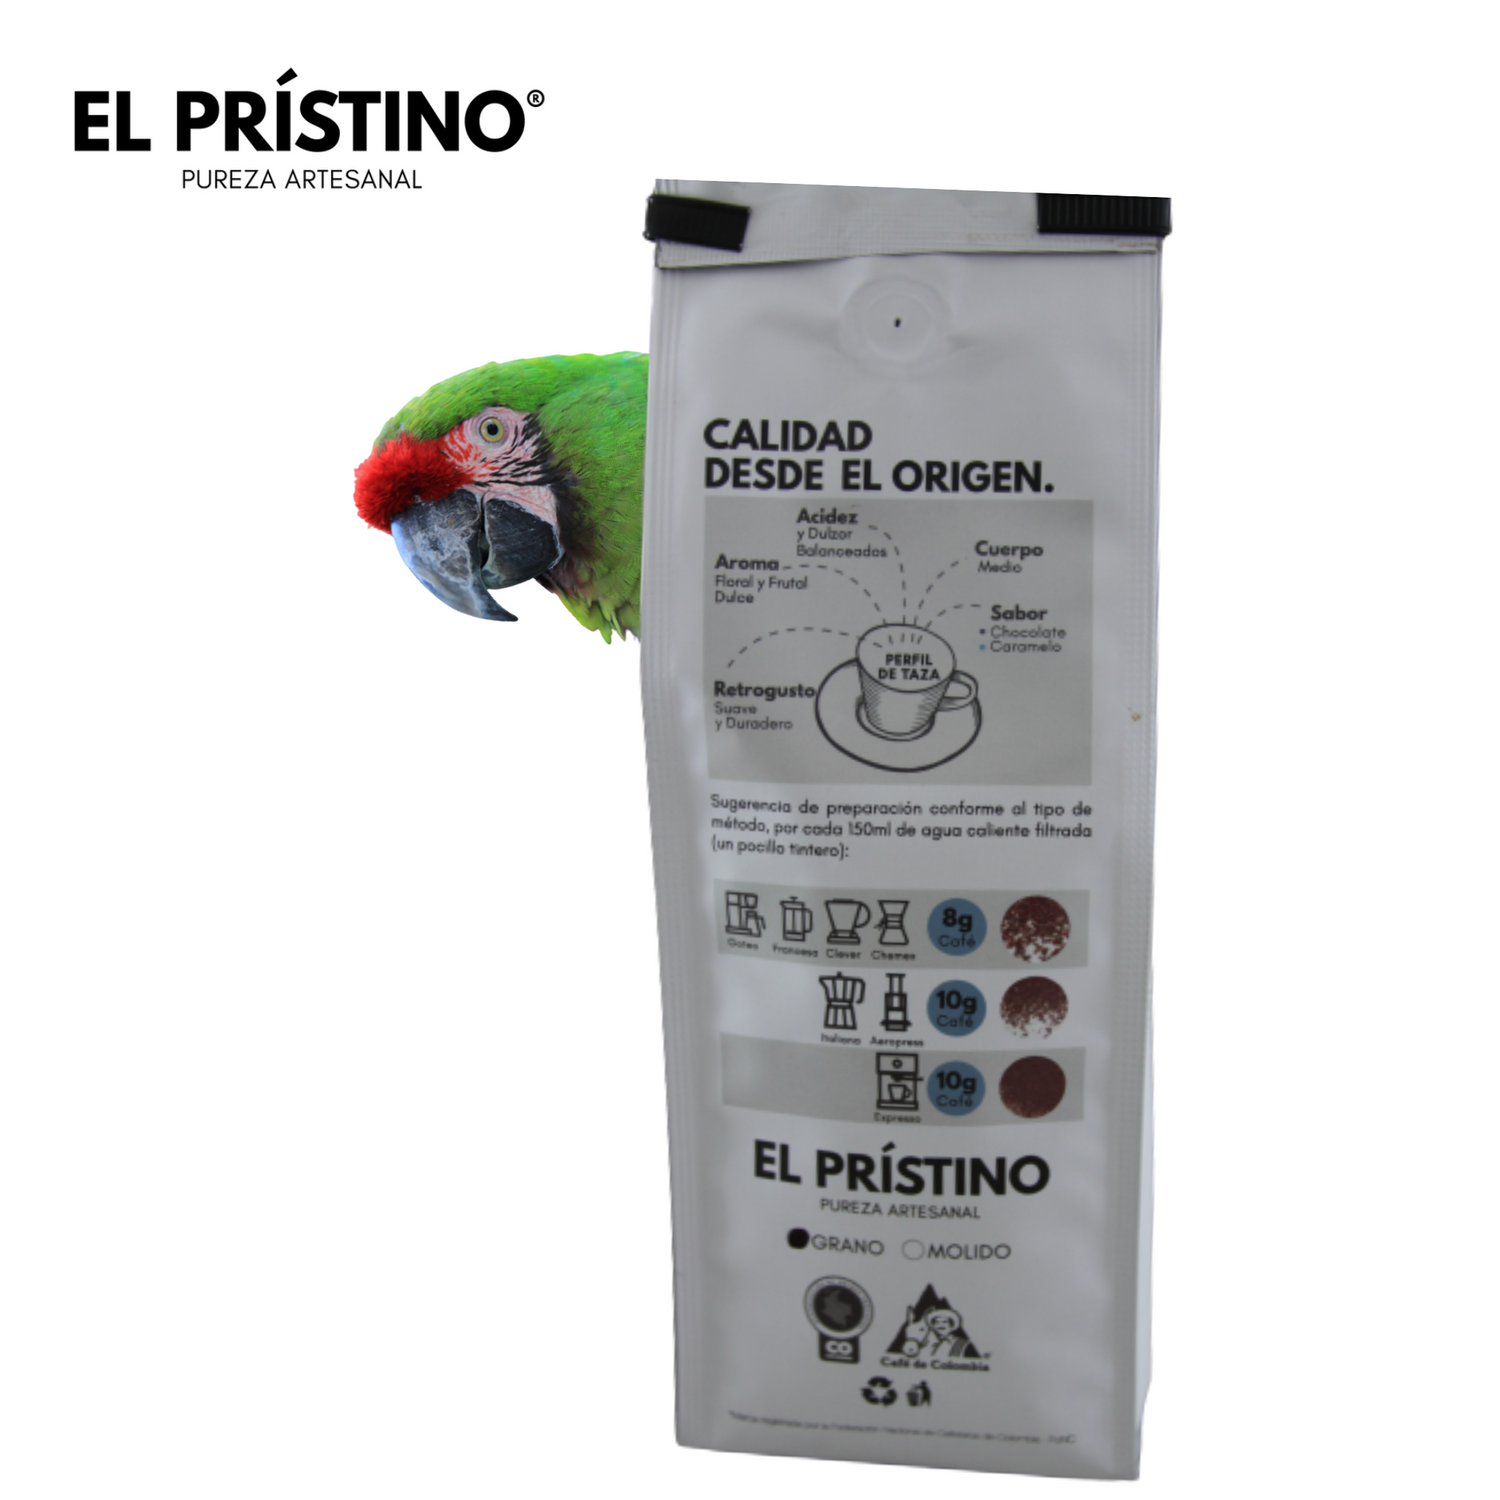 El Pristino Specialty Colombian Coffee. Medium to dak roast. Buy it here at Coffee Bean and Birds